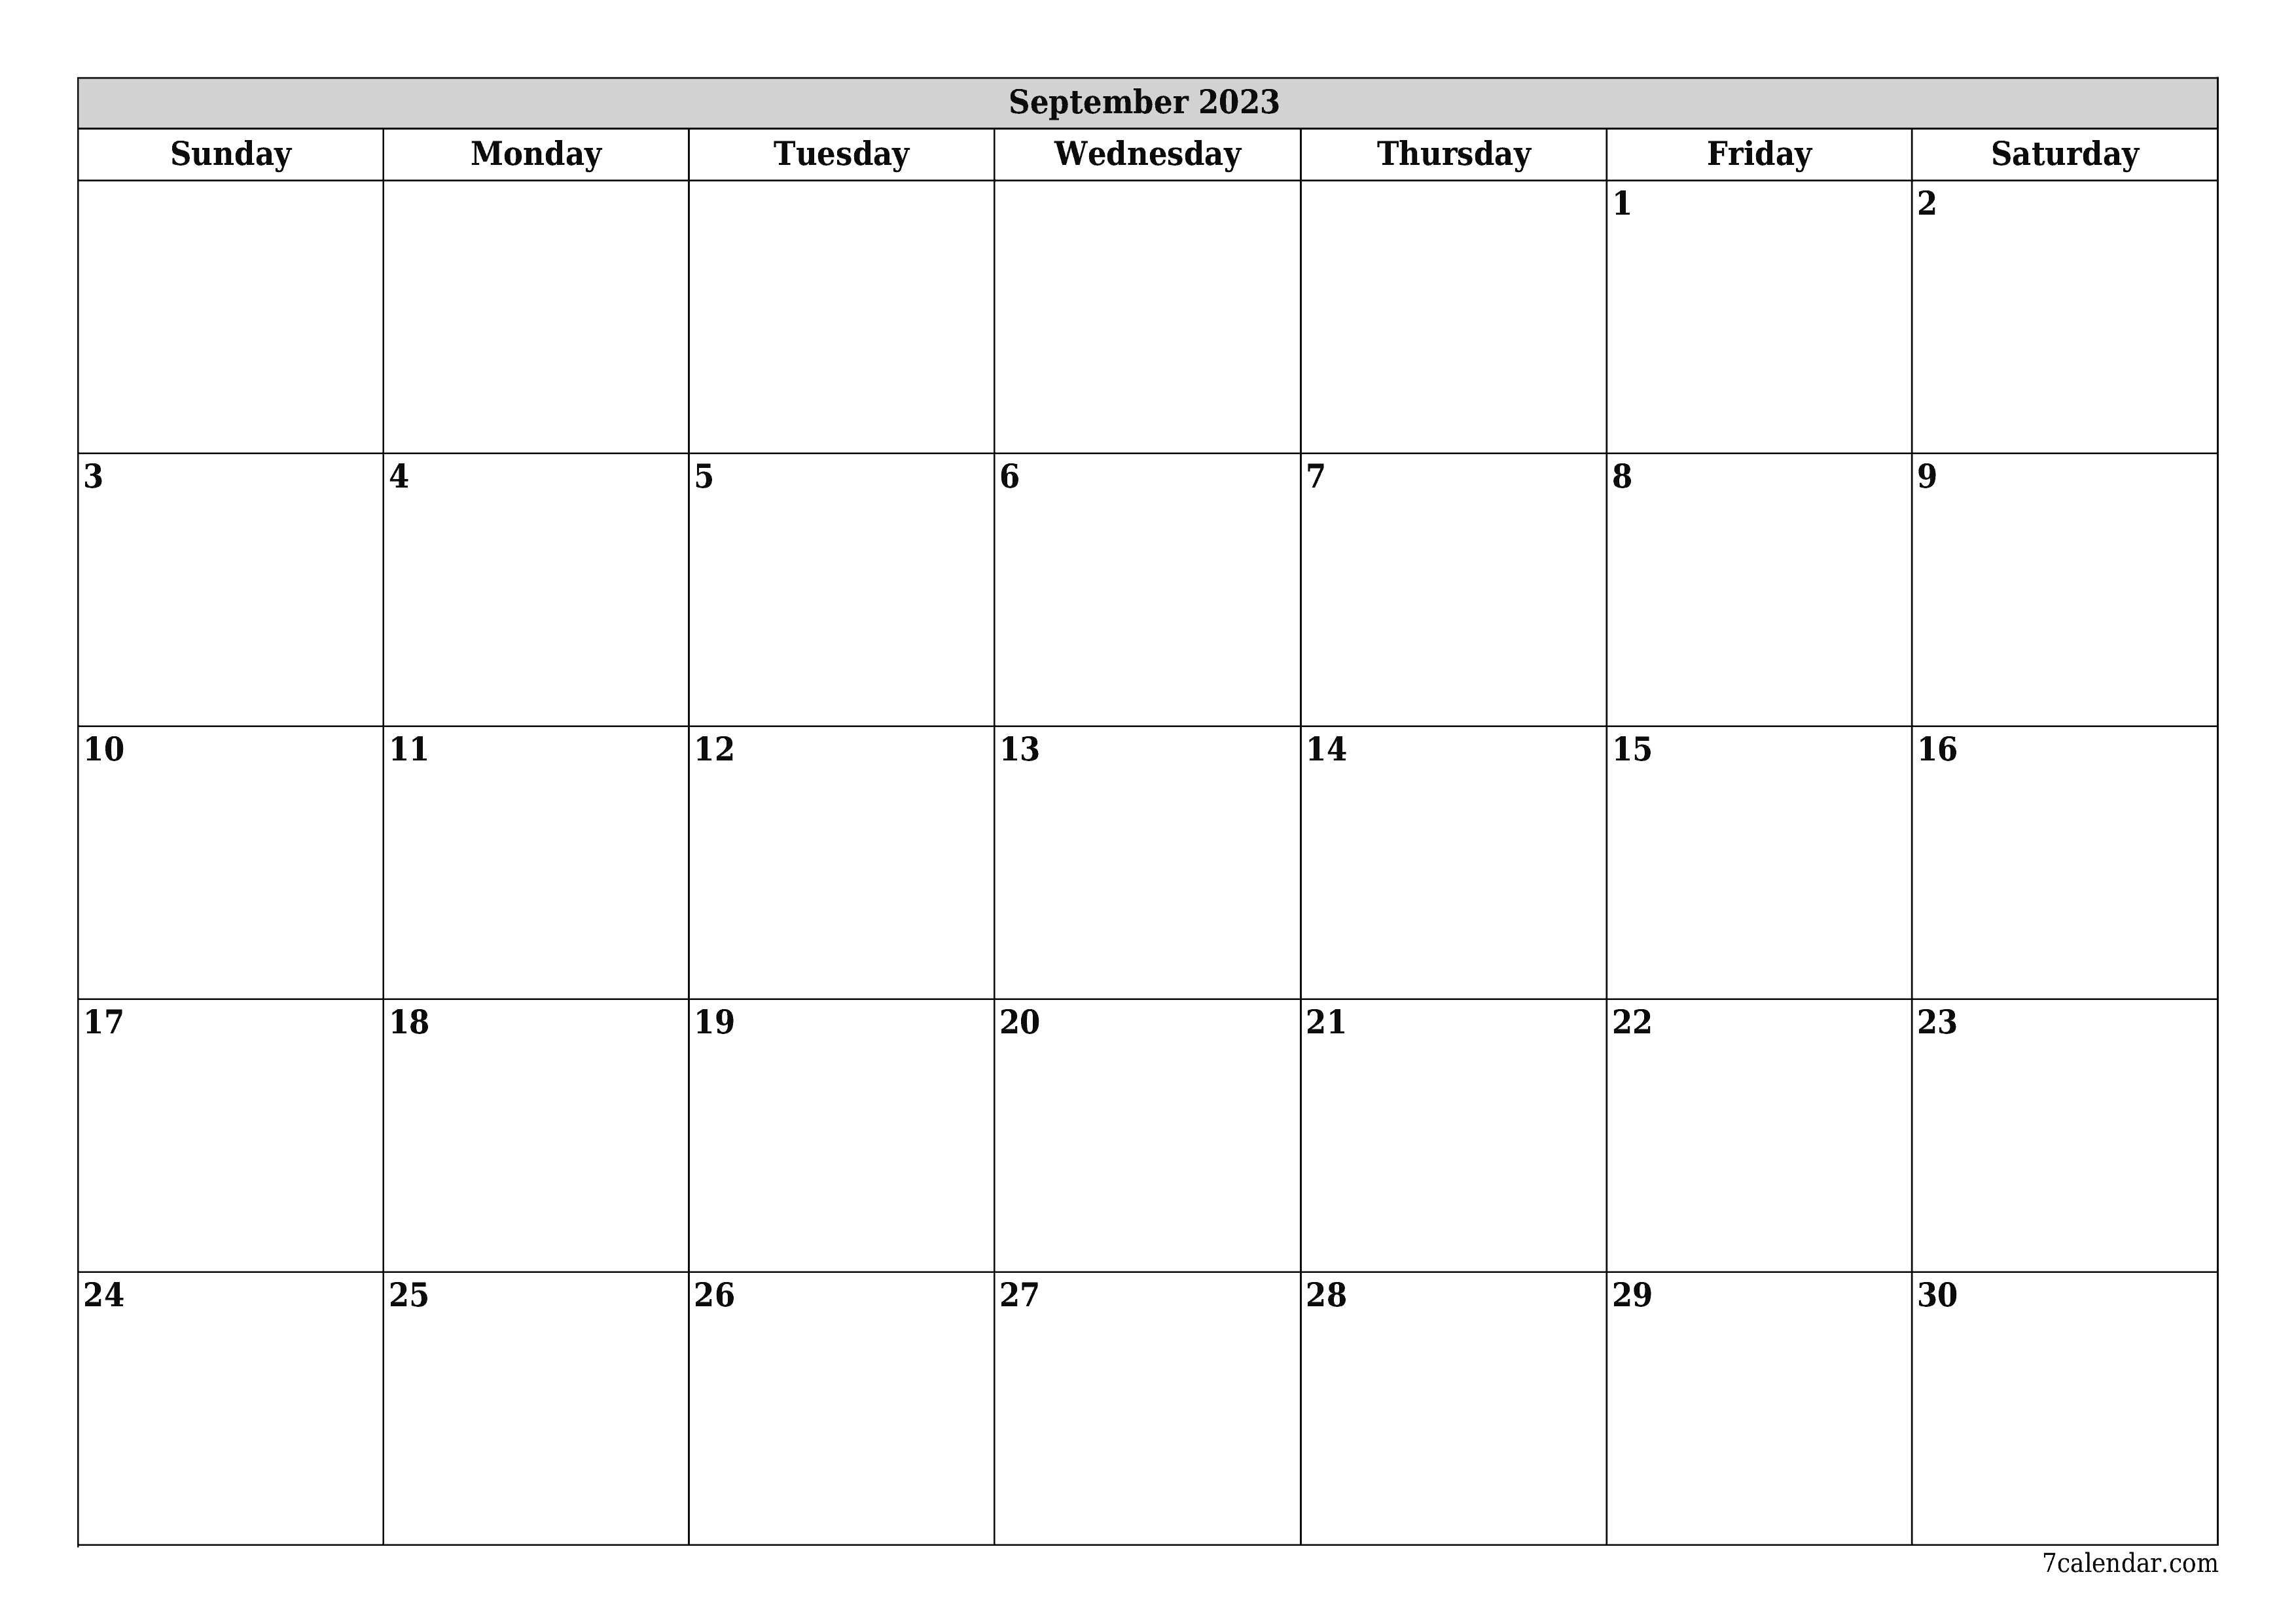 printable wall template free horizontal Monthly planner calendar September (Sep) 2023